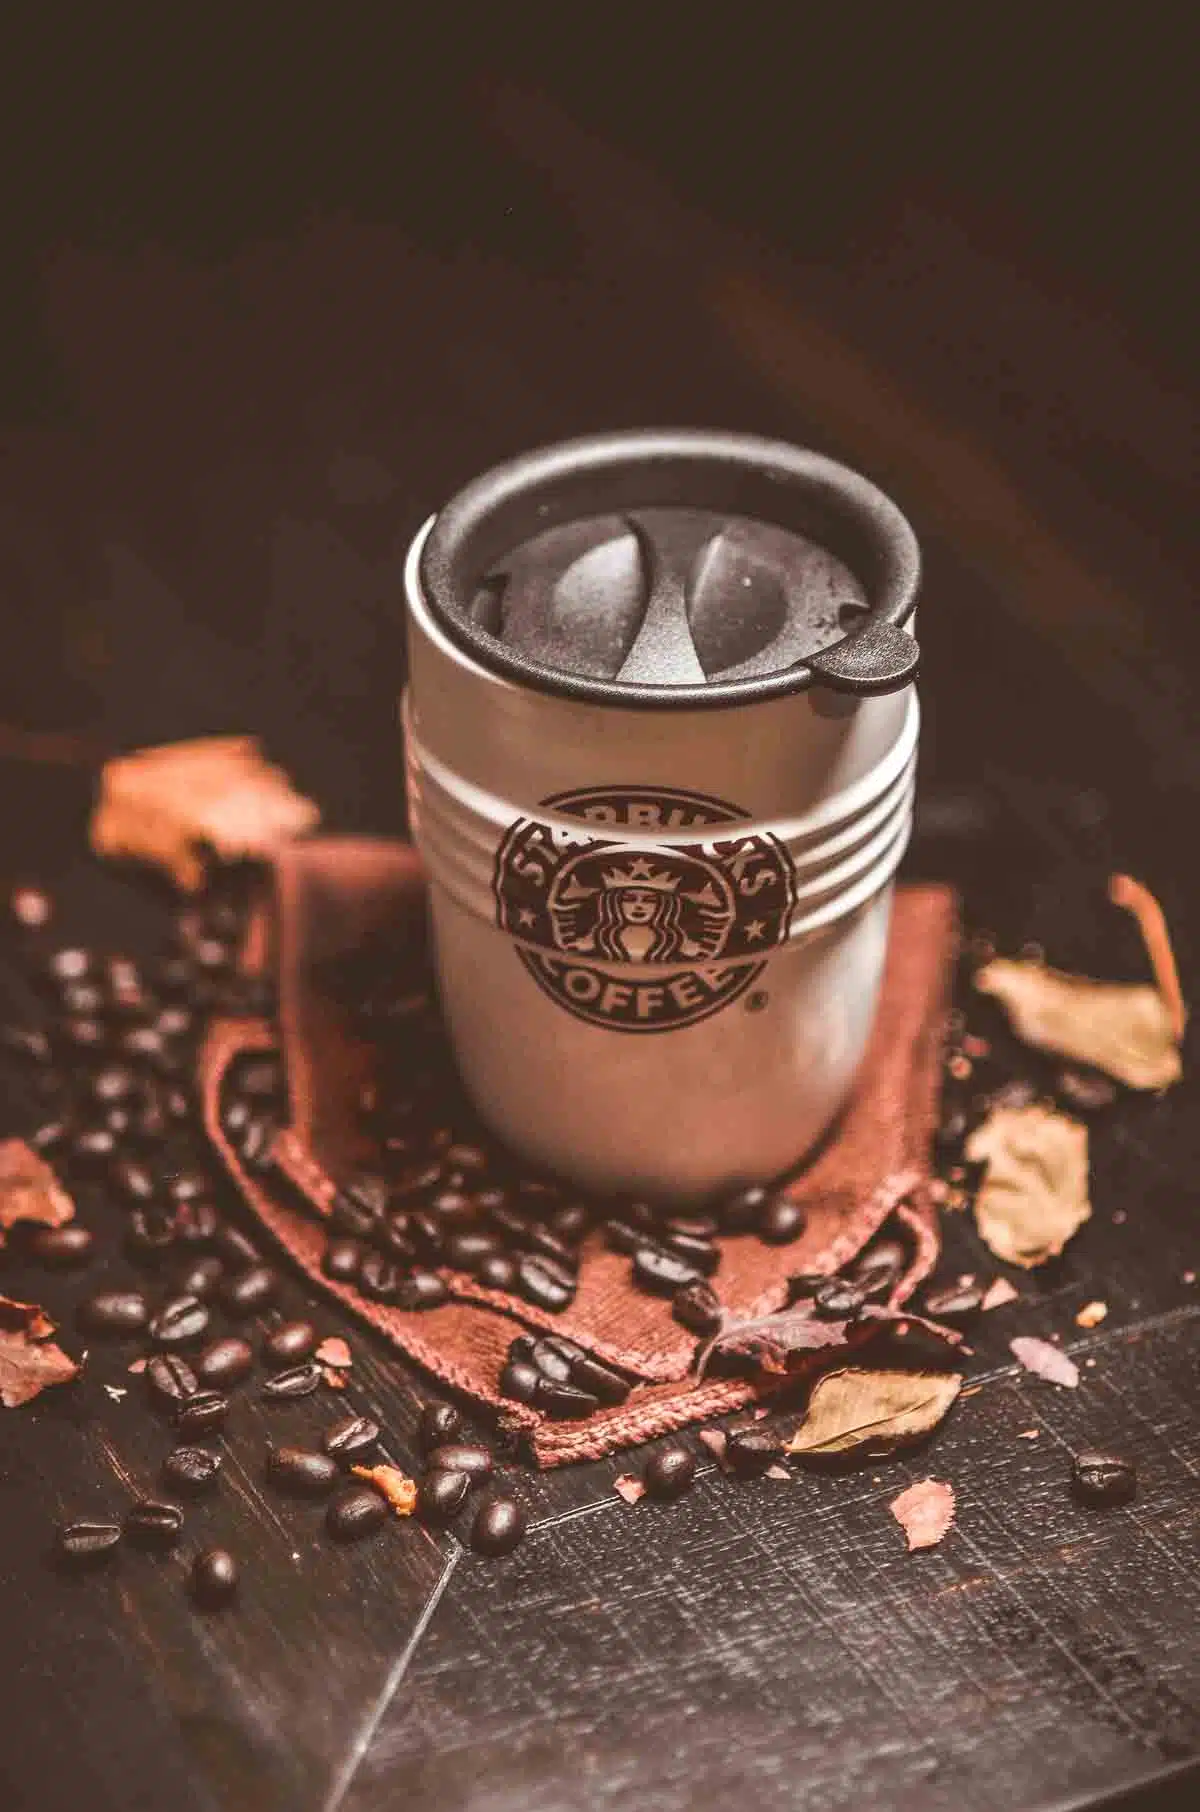 Starbucks Coffee Mug with fresh coffee beans.